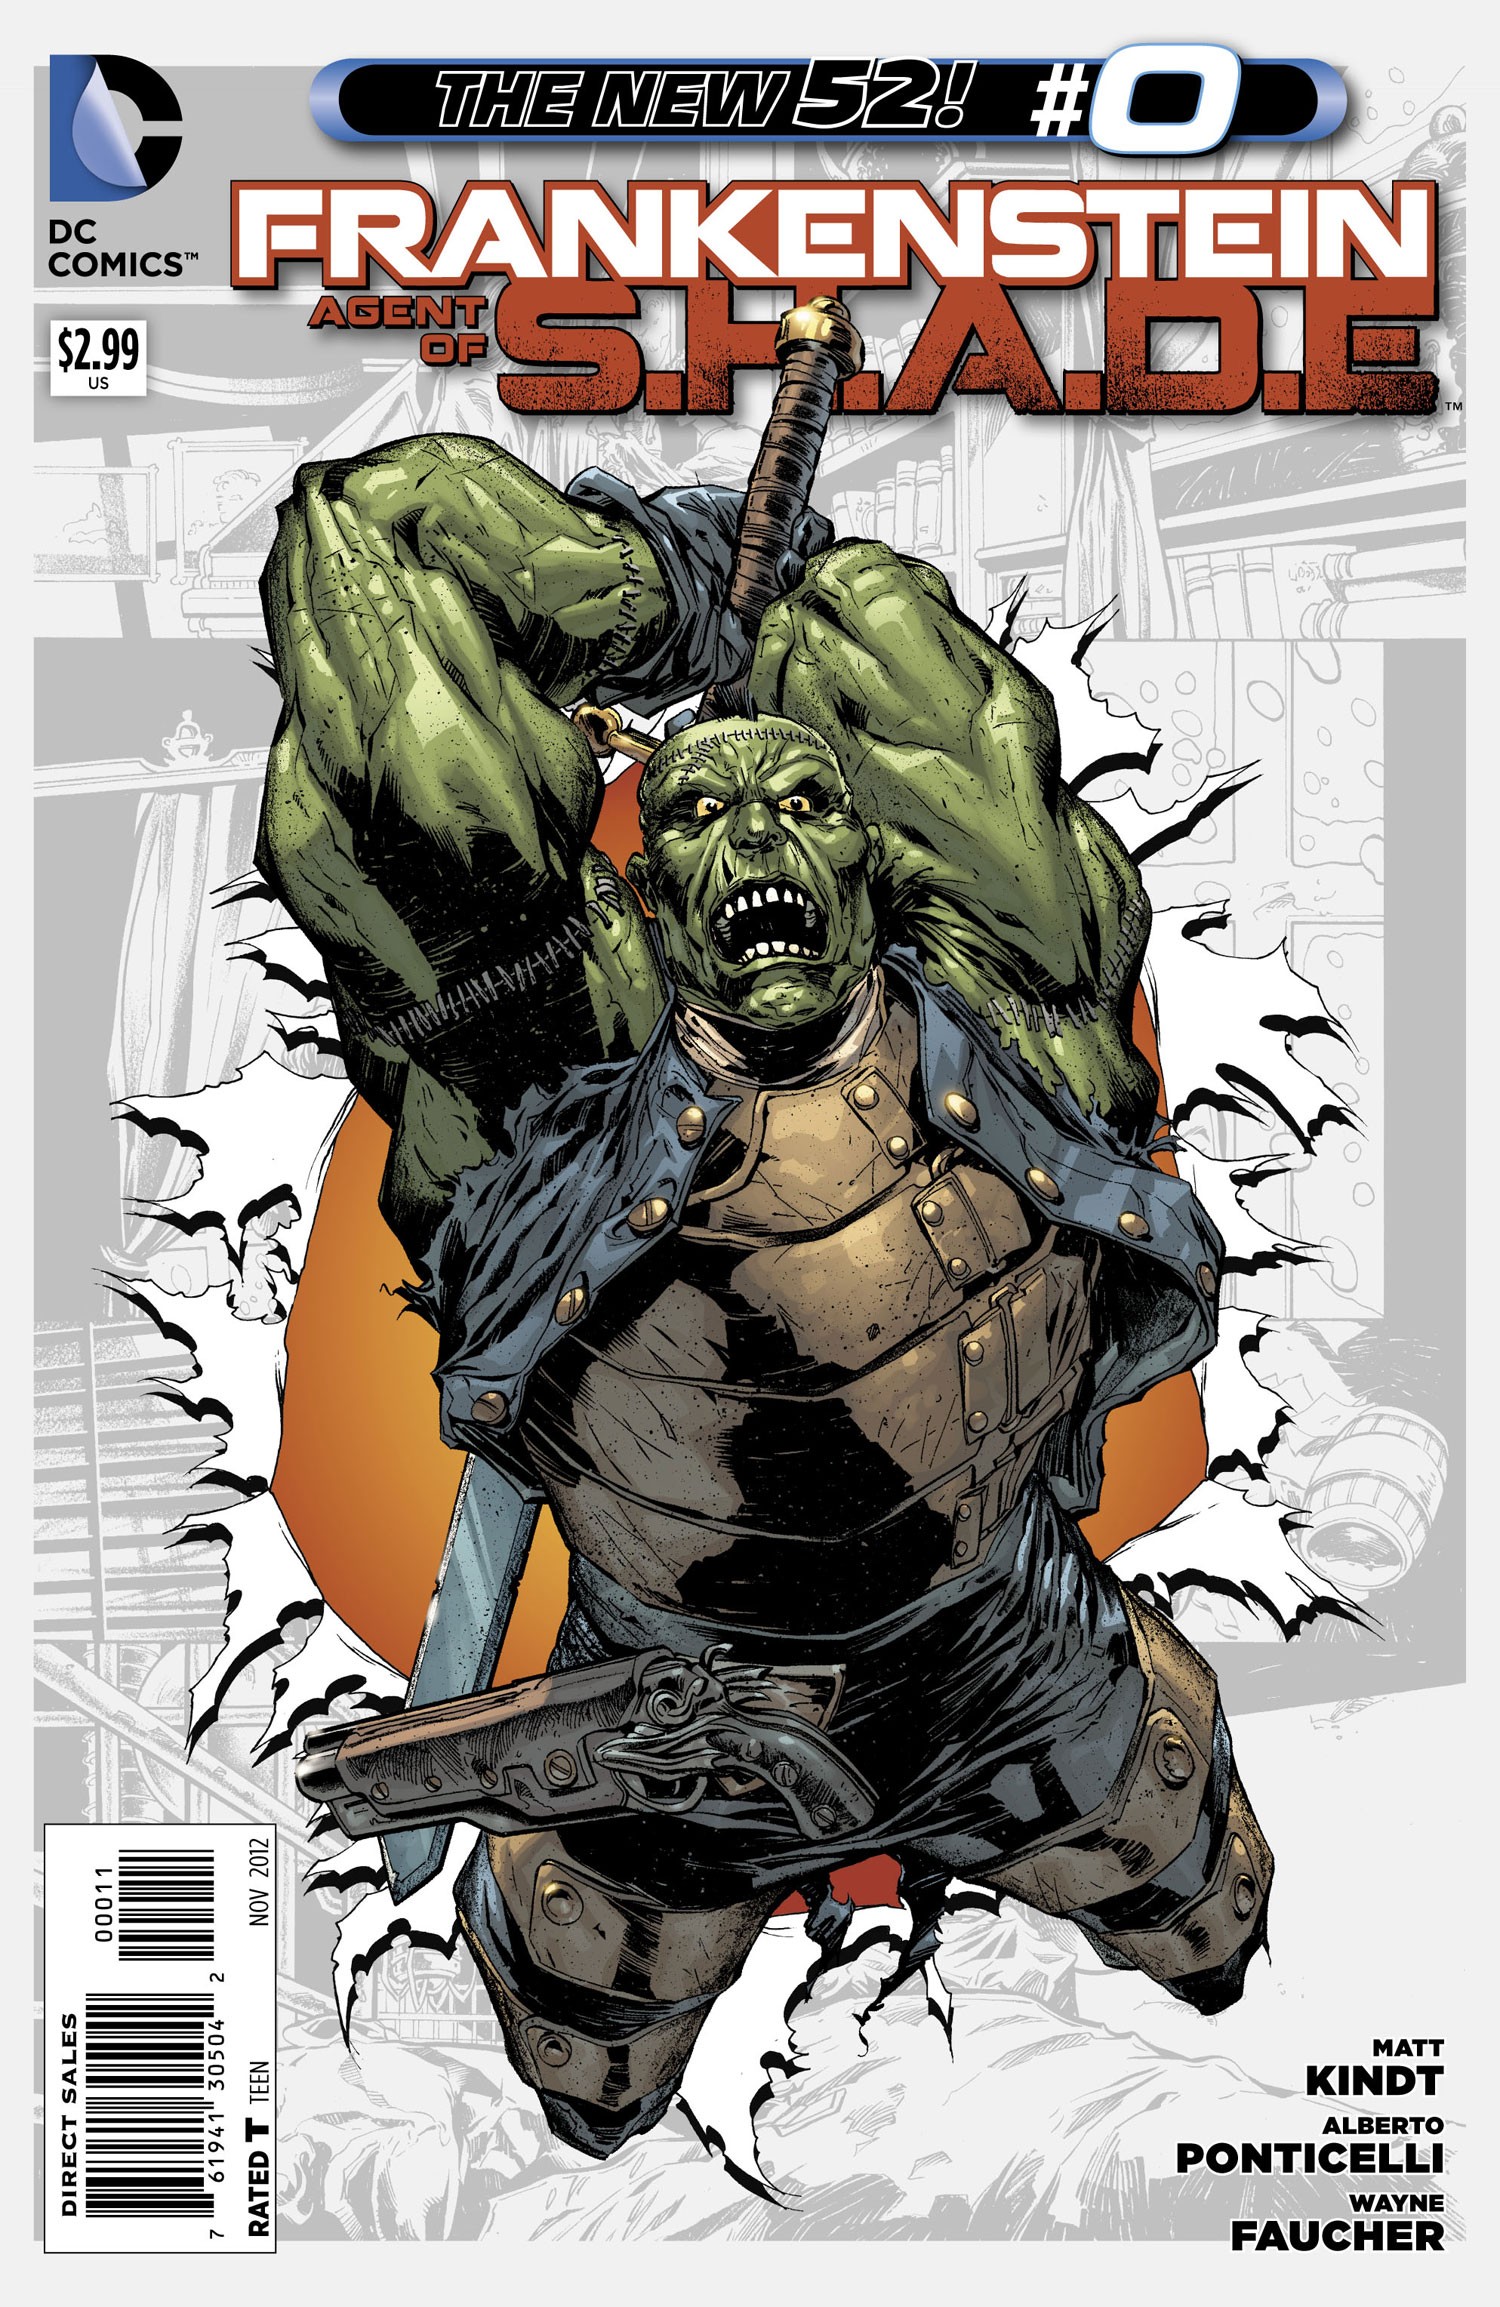 Frankenstein, Agent of S.H.A.D.E. Vol. 1 #0